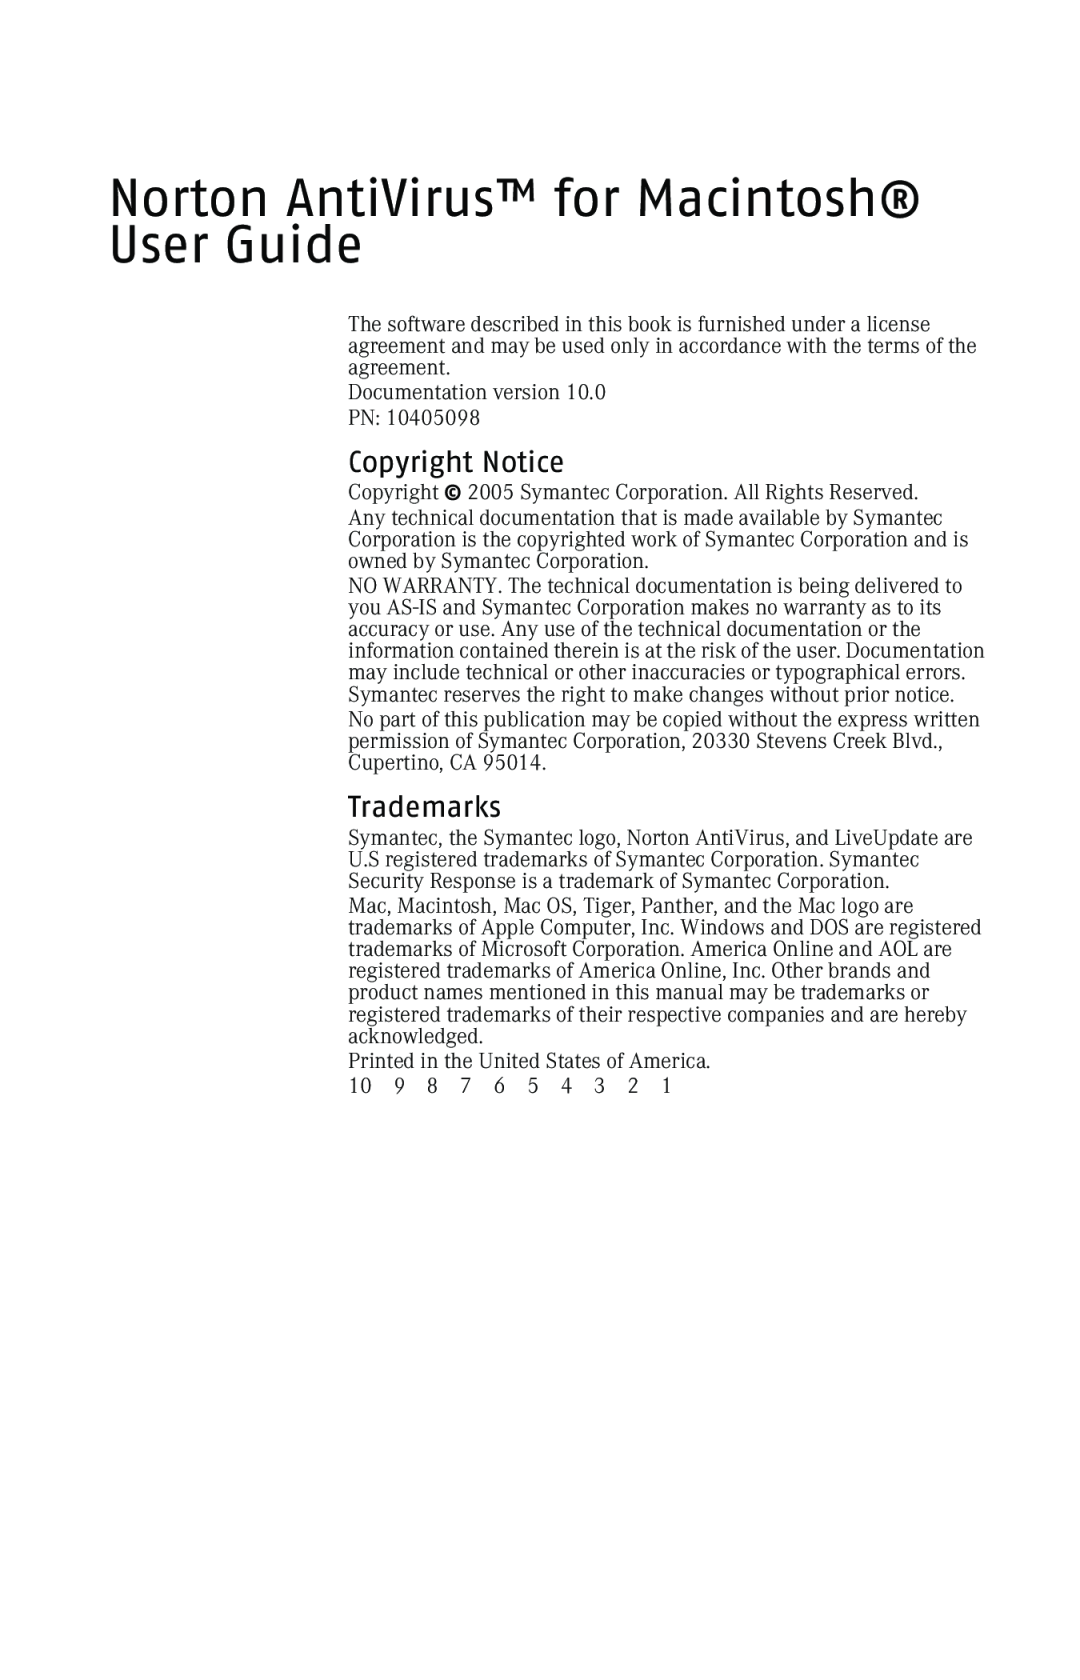 Symantec 10 manual Norton AntiVirus for Macintosh User Guide, Copyright Notice, Trademarks 